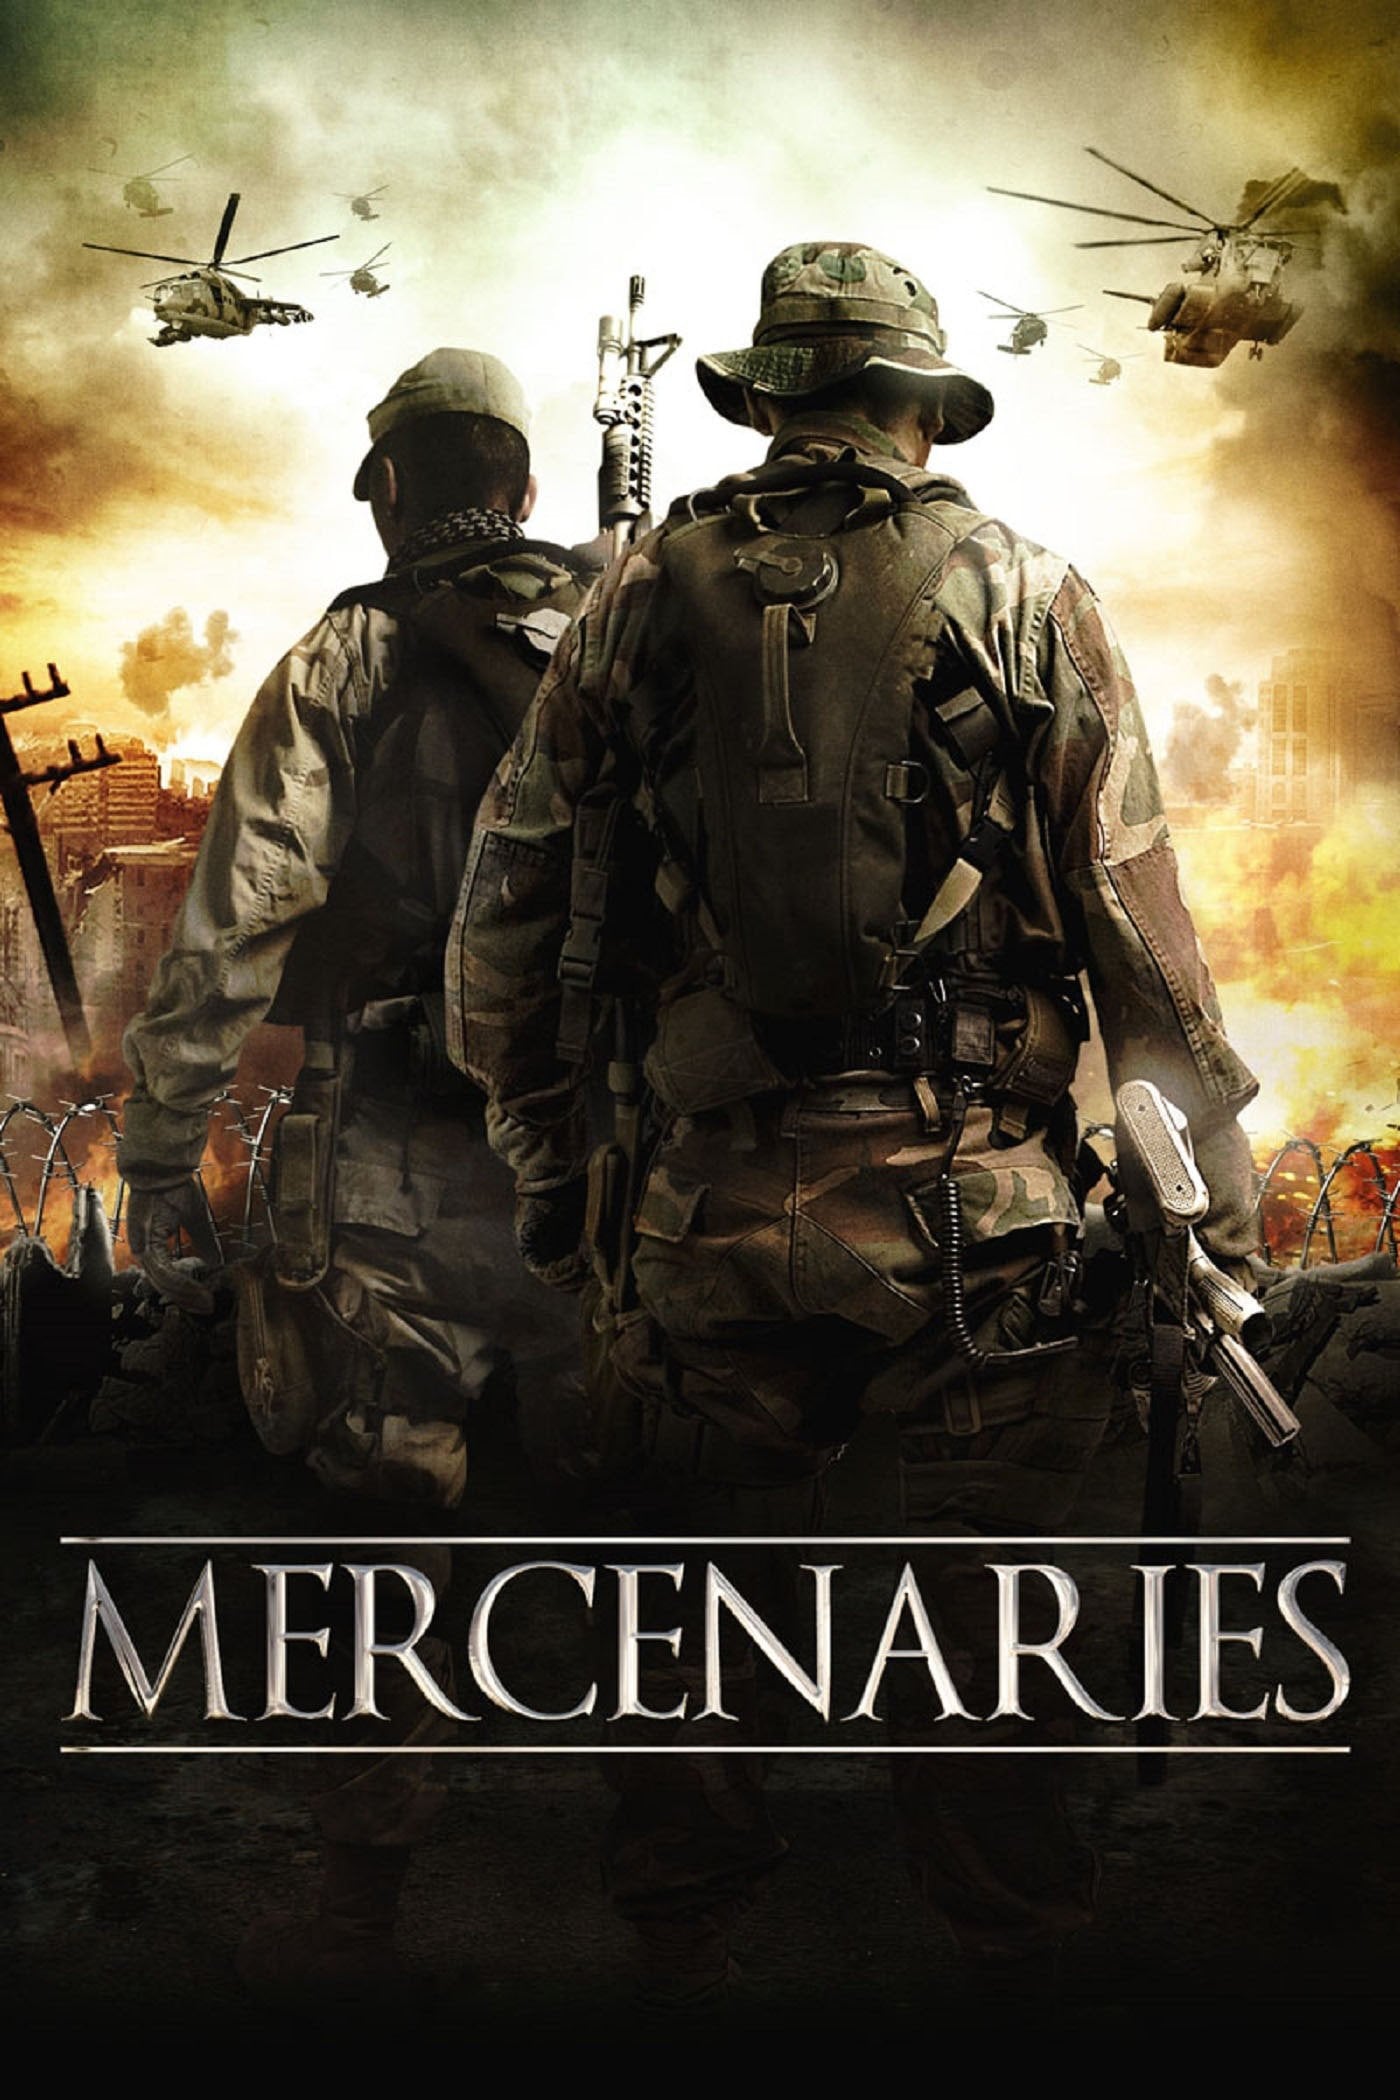 Mercenaires